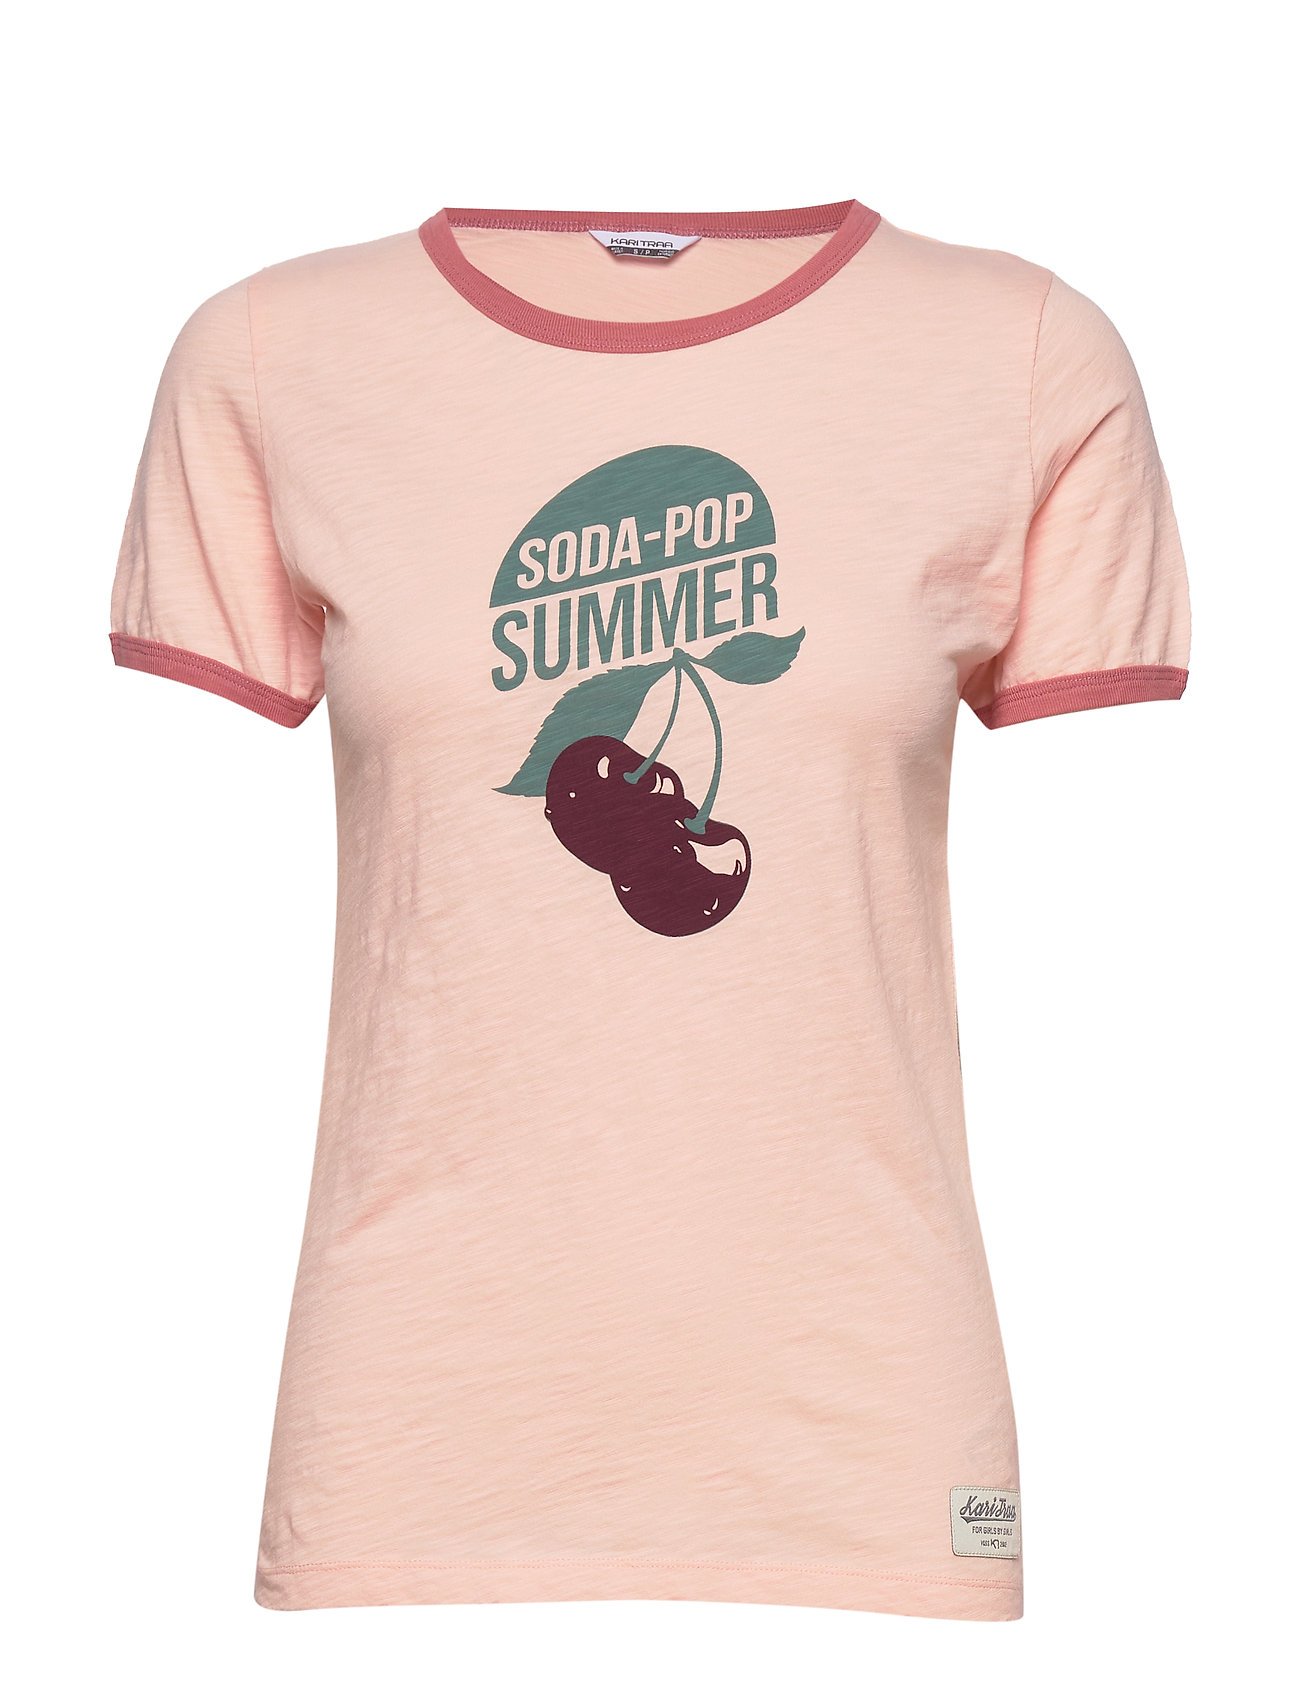 Songve Tee T-shirts & Tops Short-sleeved Vaaleanpunainen Kari Traa